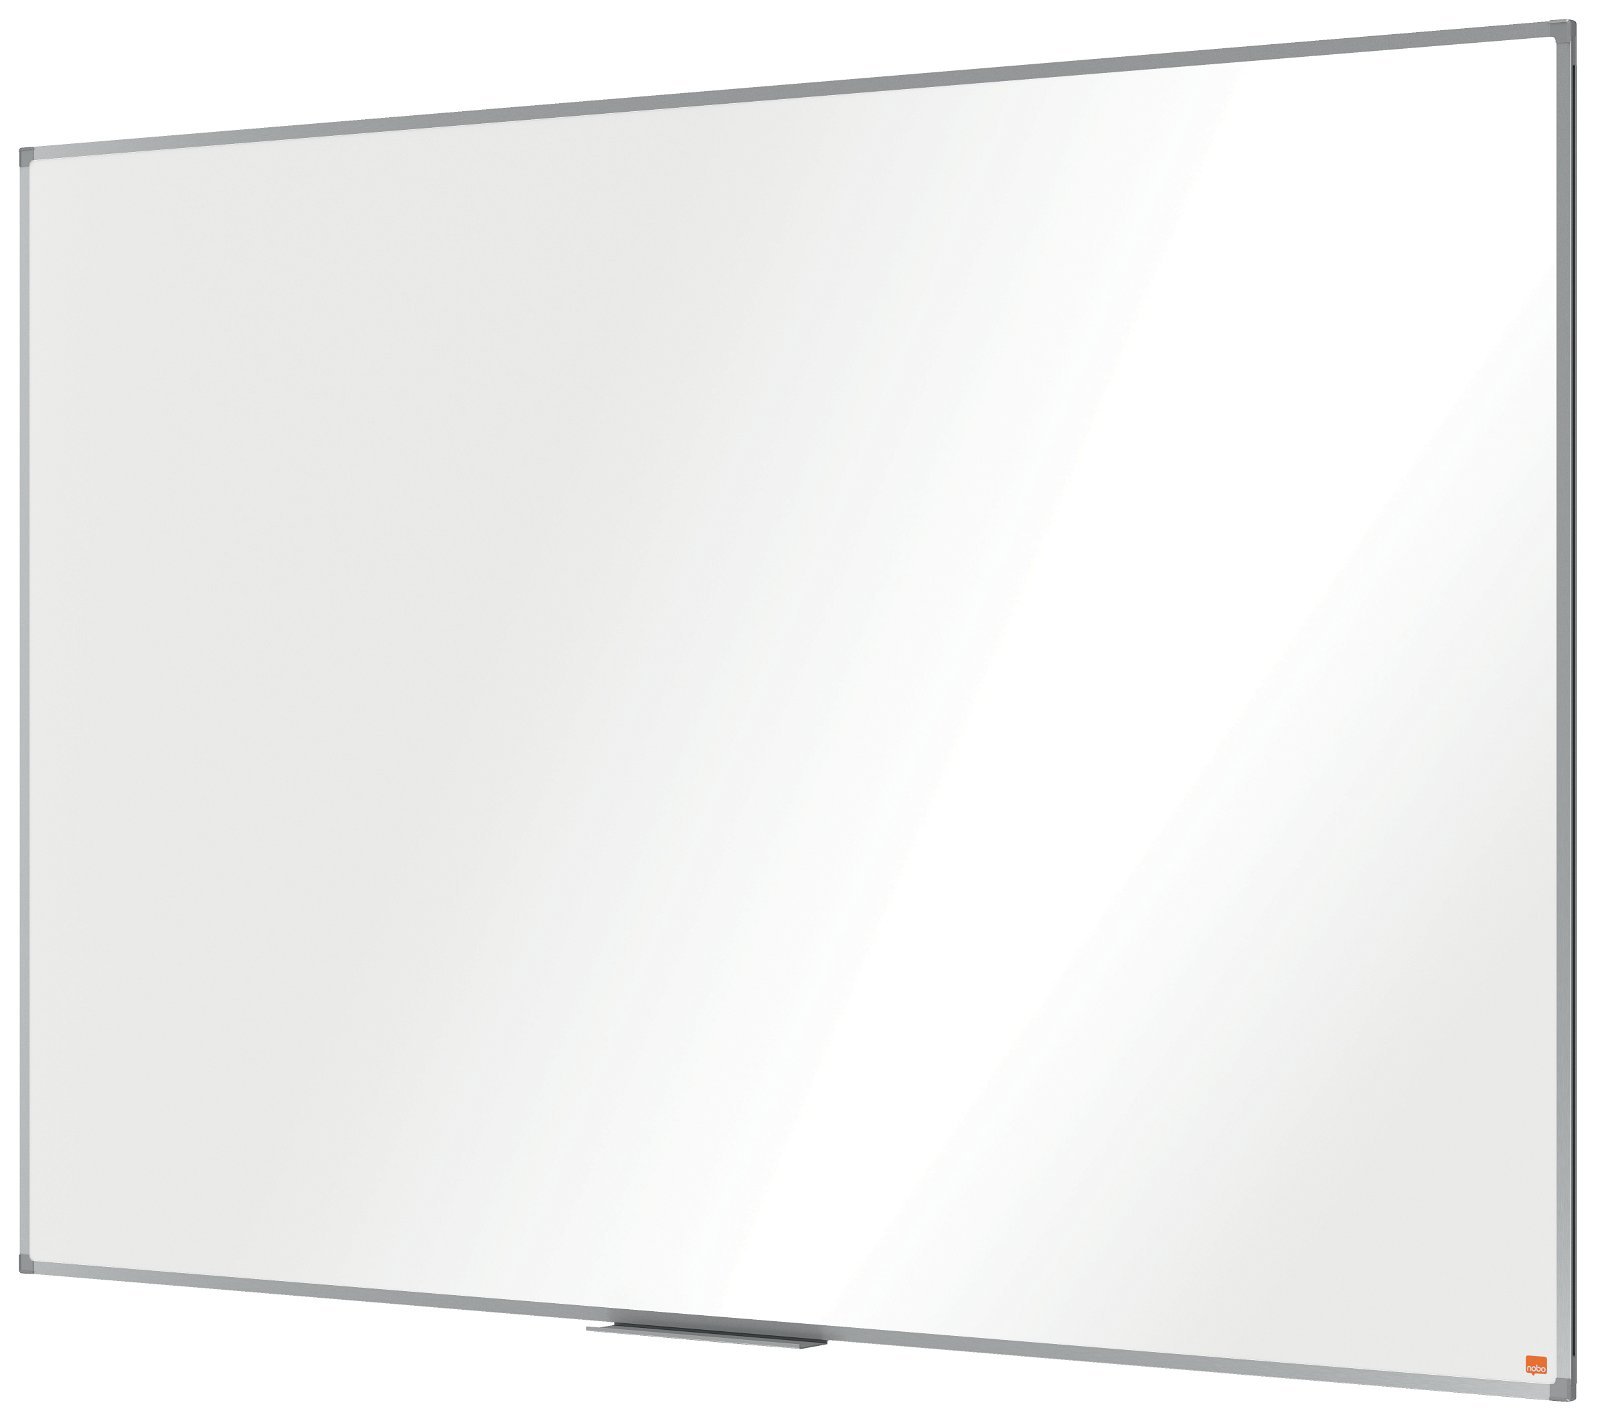 Nobo Essence whiteboardtavle 120 cm x 180 cm,